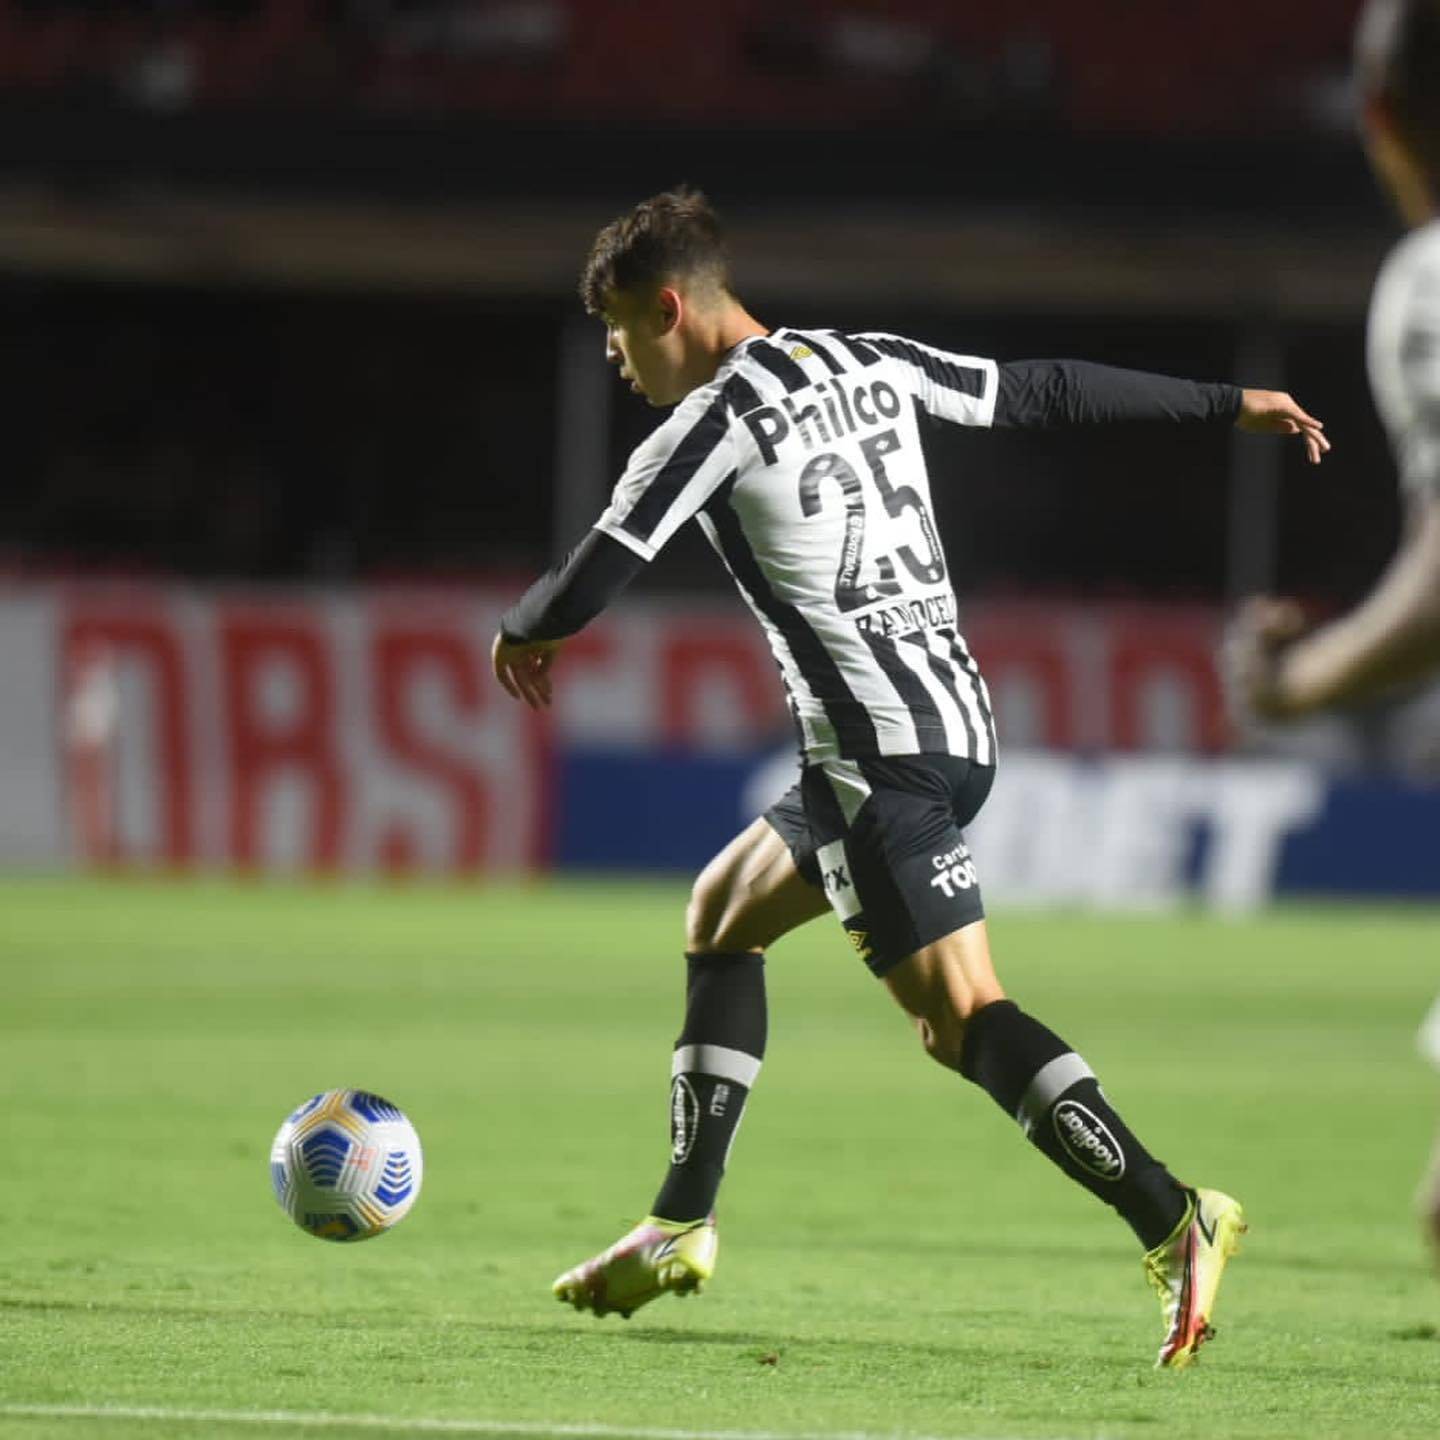 Foto: IVAN STORTI / SANTOS FC 